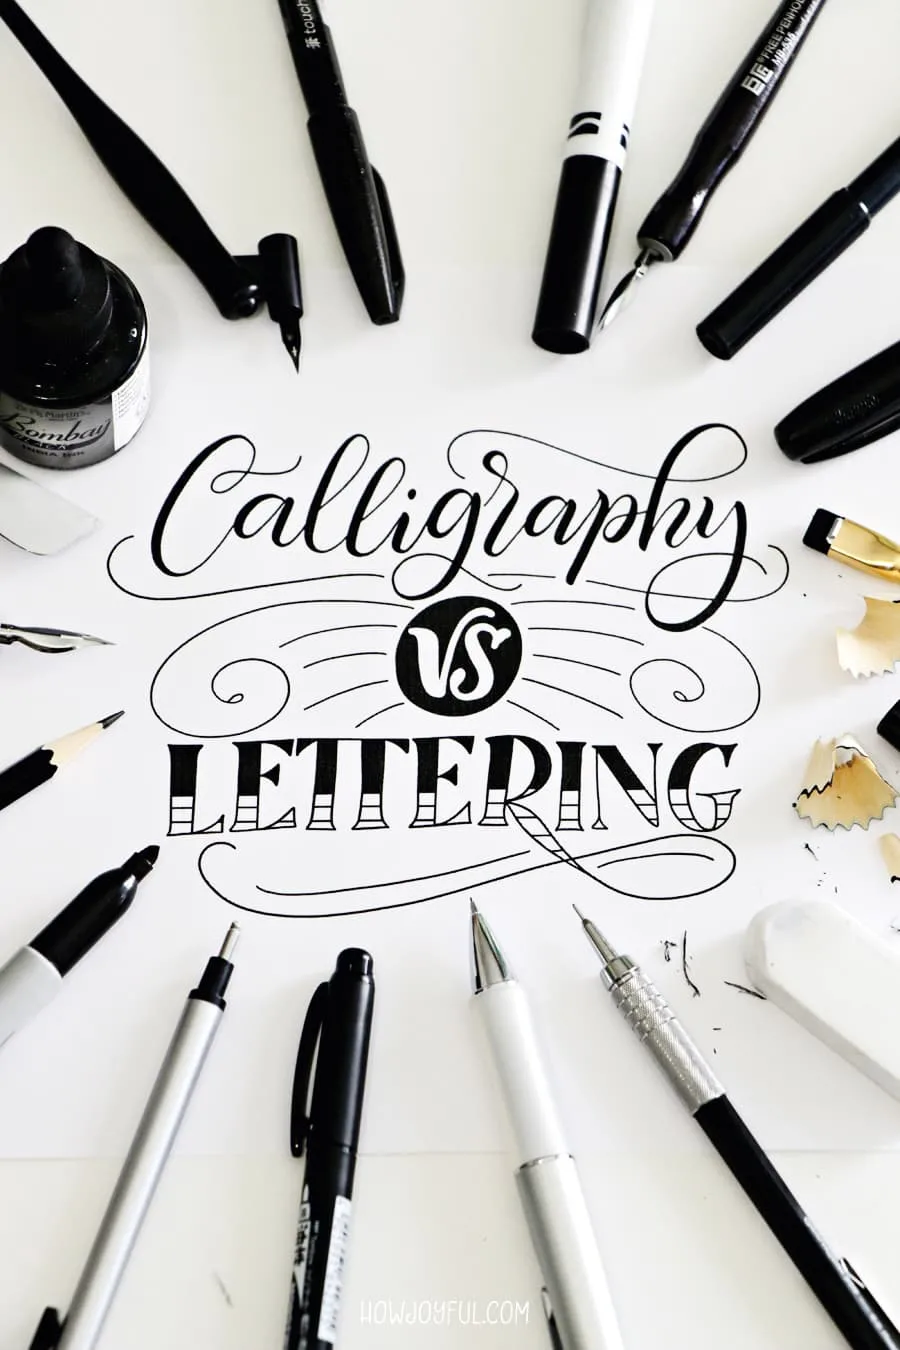 Calligraphy vs lettering